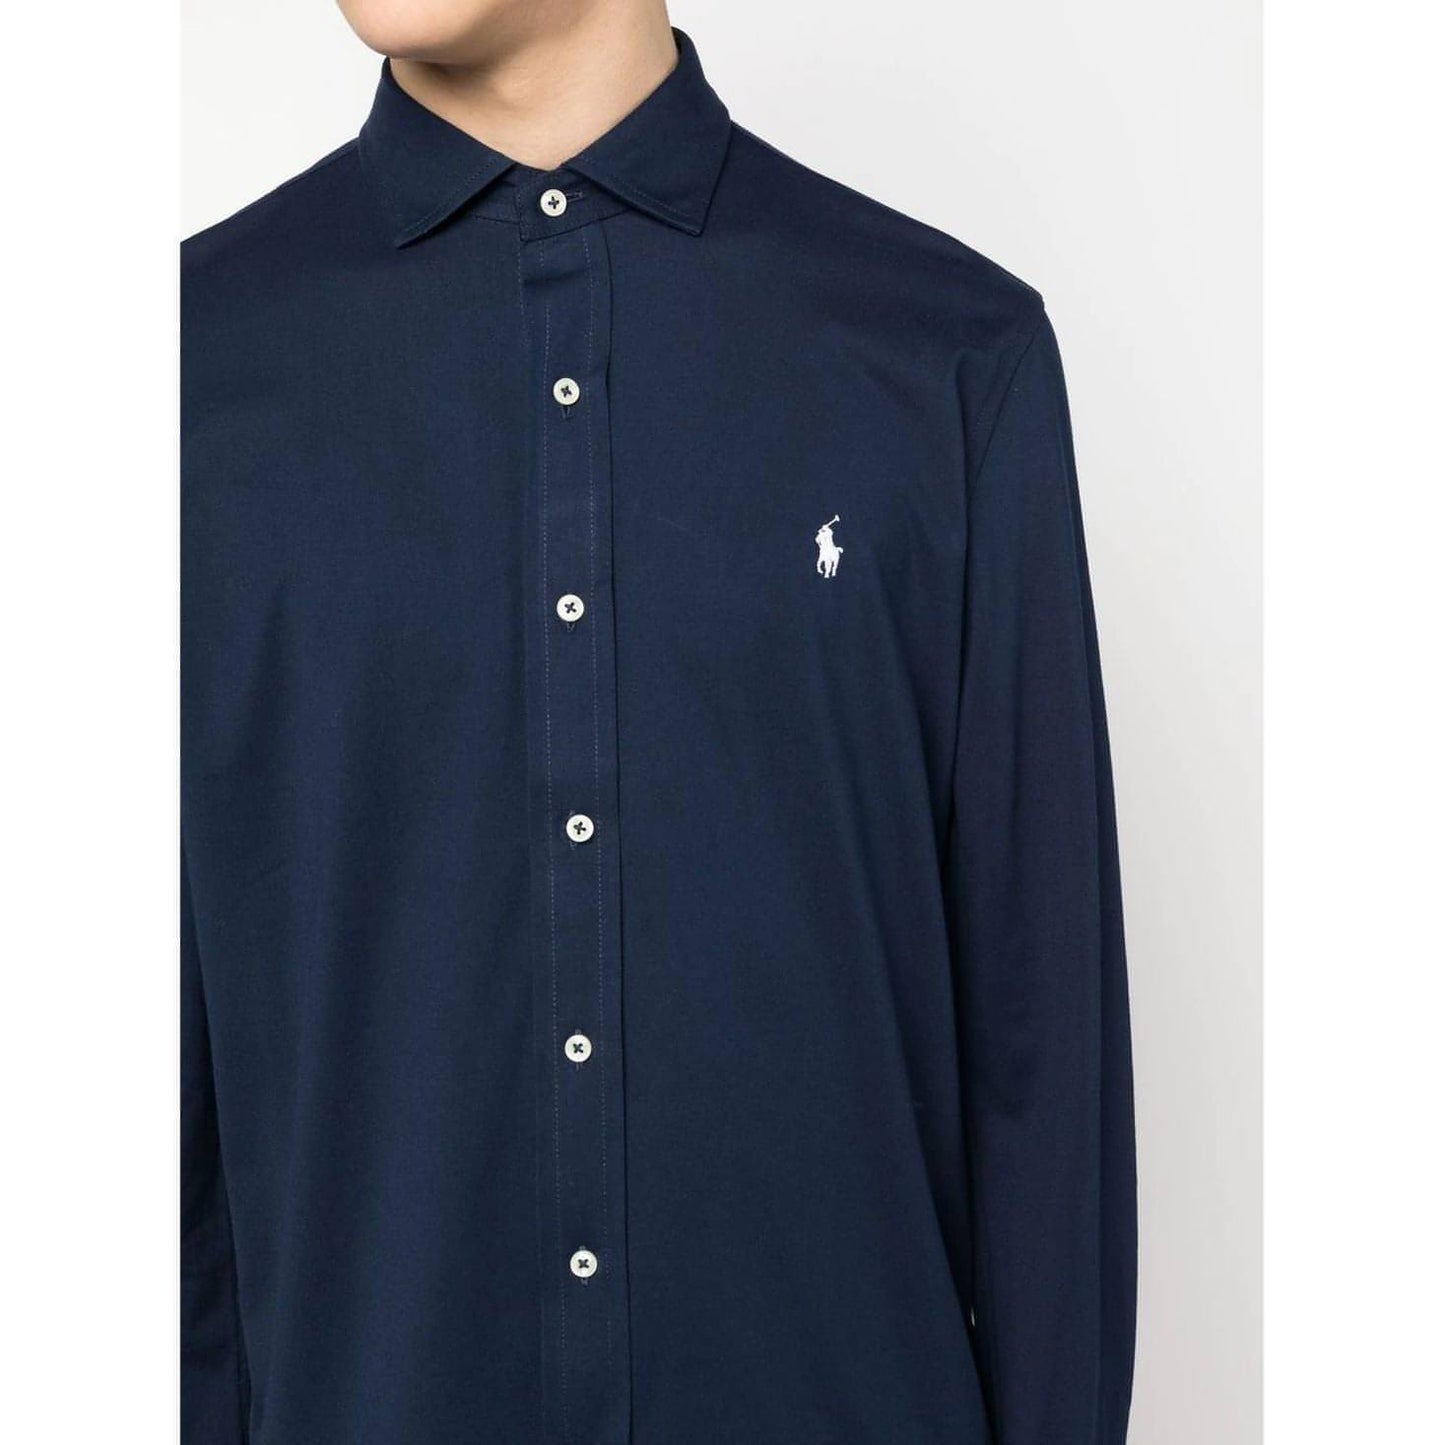 POLO RALPH LAUREN vyriški mėlyni marškinėliai ilgomis rankovėmis Long sleeve sport shirt